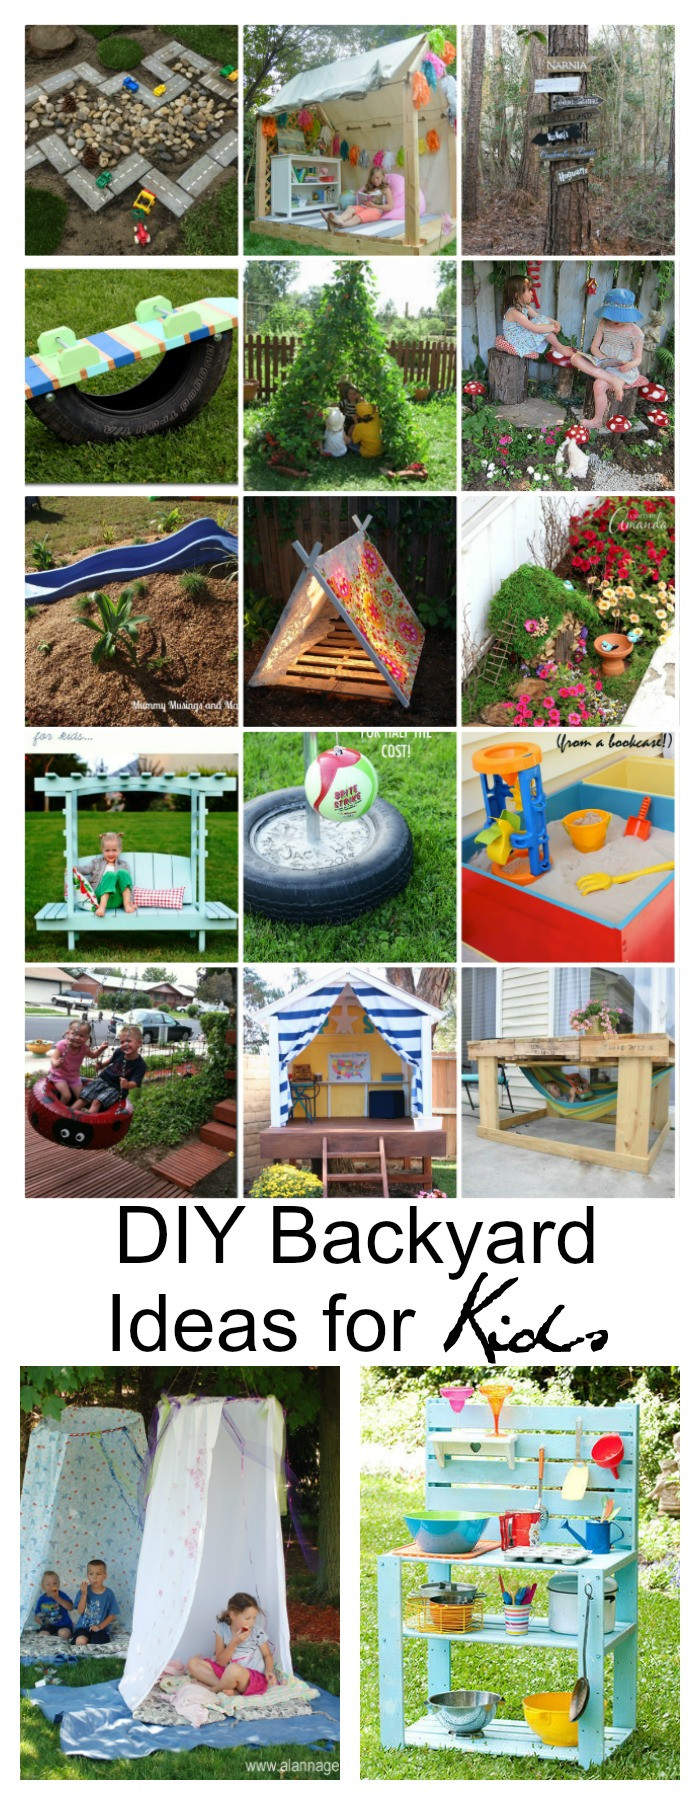 DIY Backyard Ideas For Kids
 DIY Backyard Ideas for Kids The Idea Room